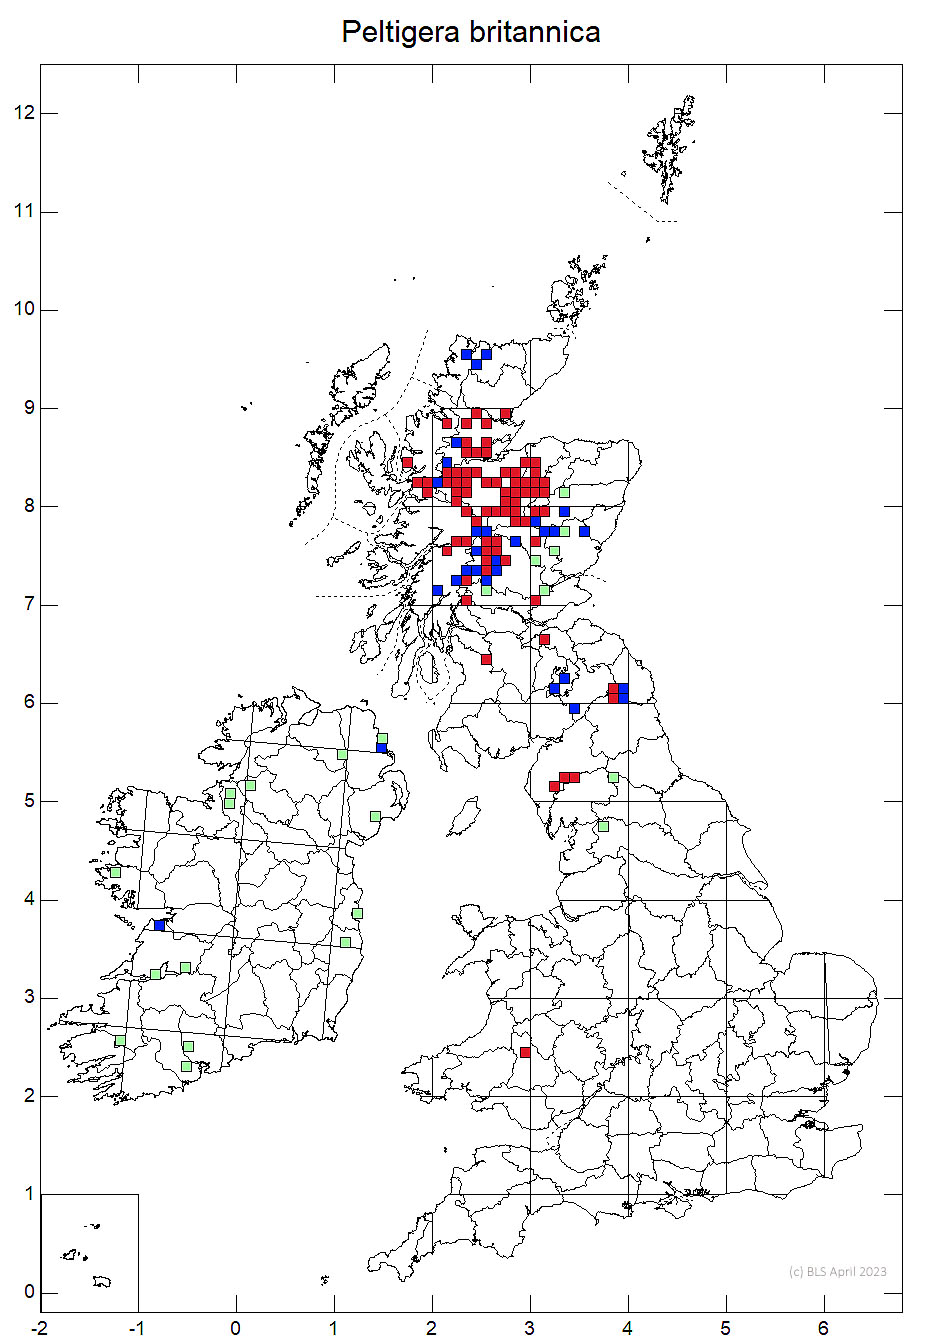 Peltigera britannica 10km sq distribution map